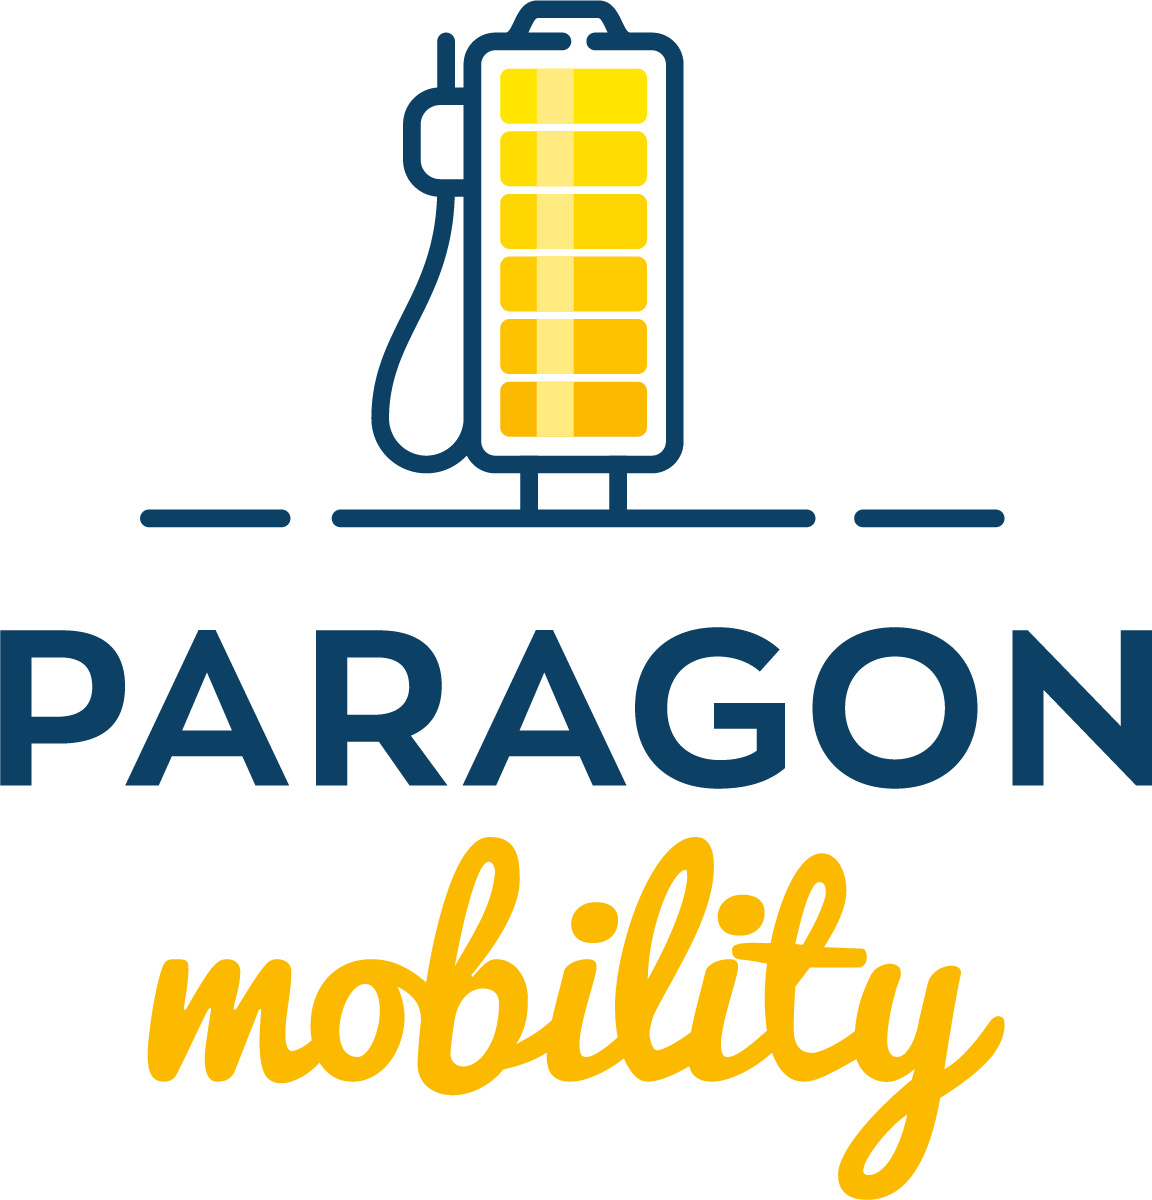 Paragon Mobility